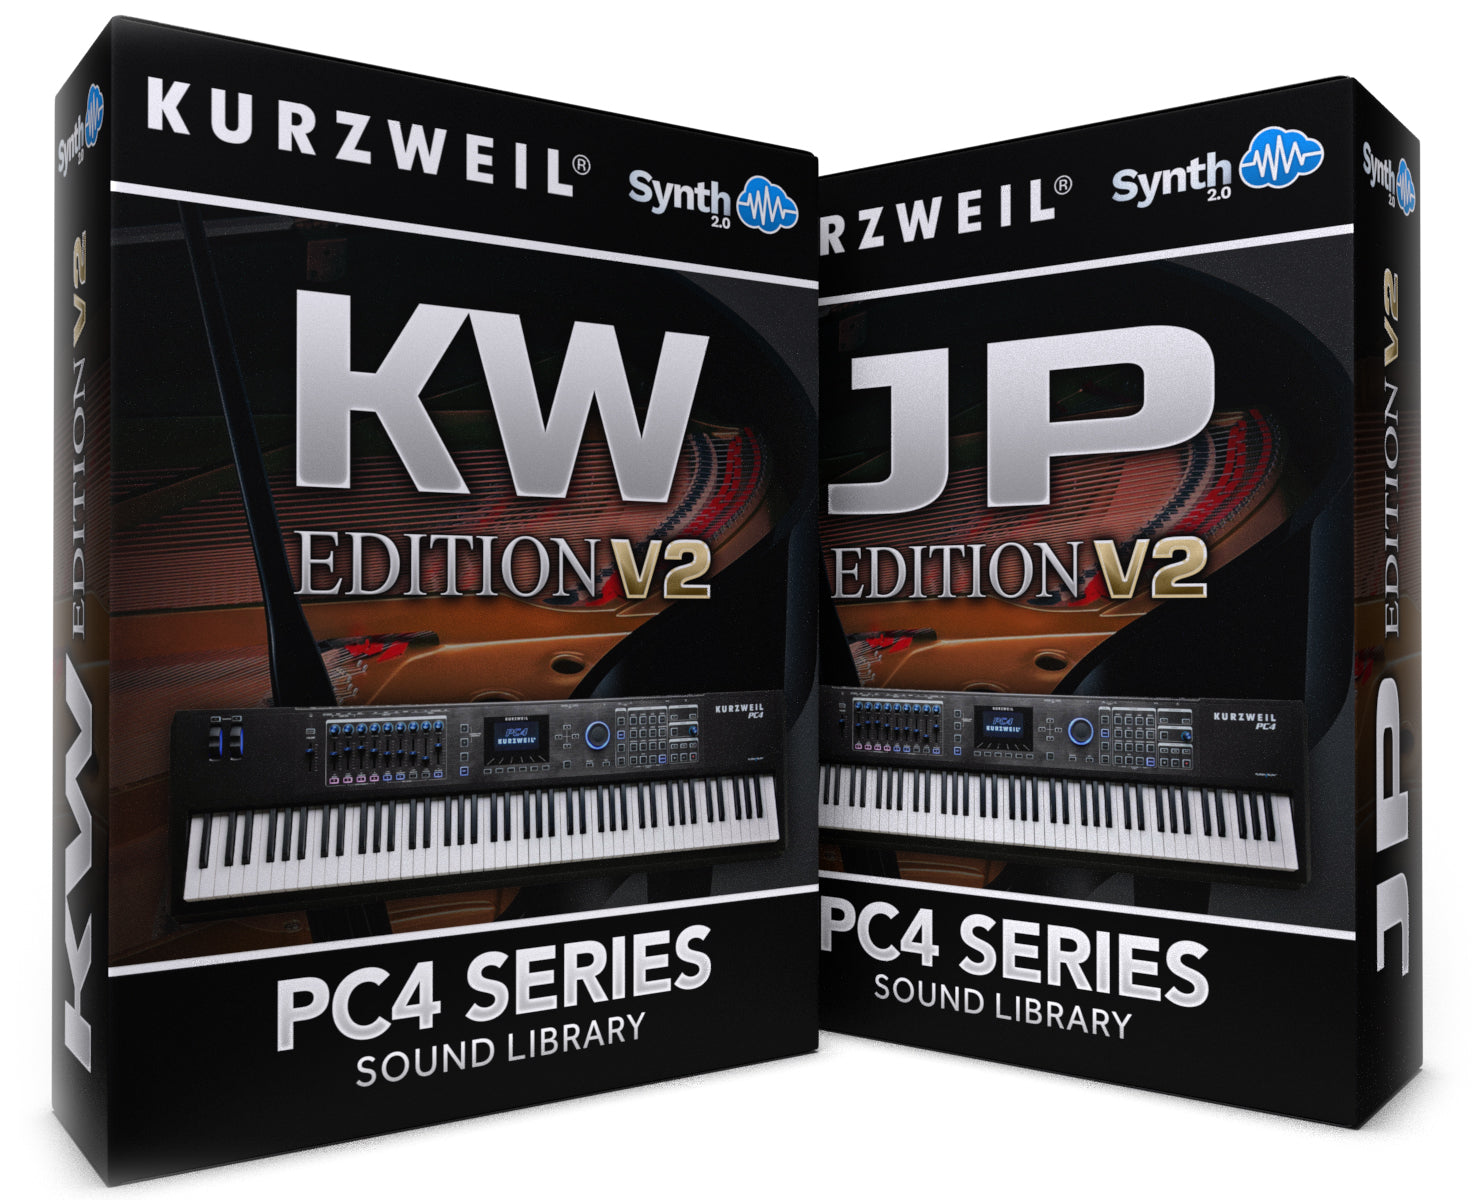 DRS052 - ( Bundle ) - KW Edition V2 + JP Edition V2 - Kurzweil PC4 Series